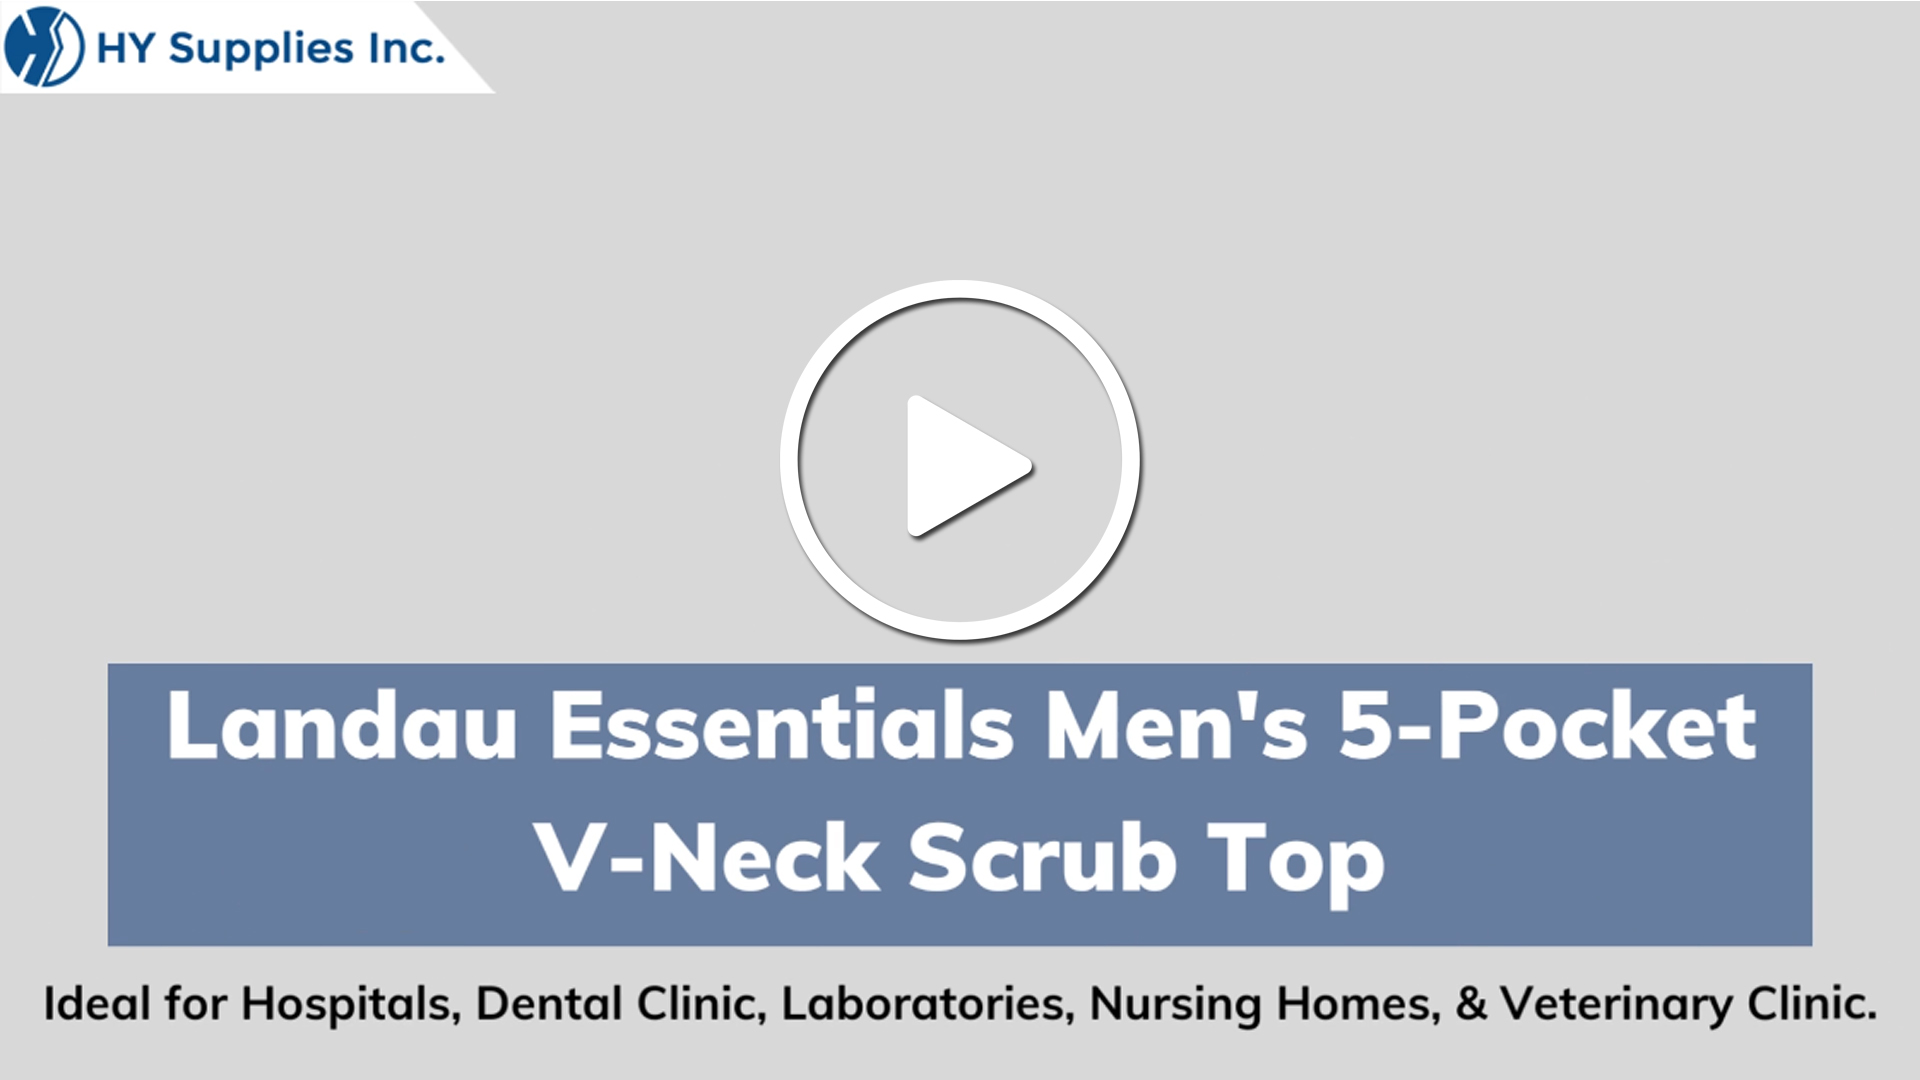 Landau Essentials Men's 5-Pocket V-Neck Scrub Top